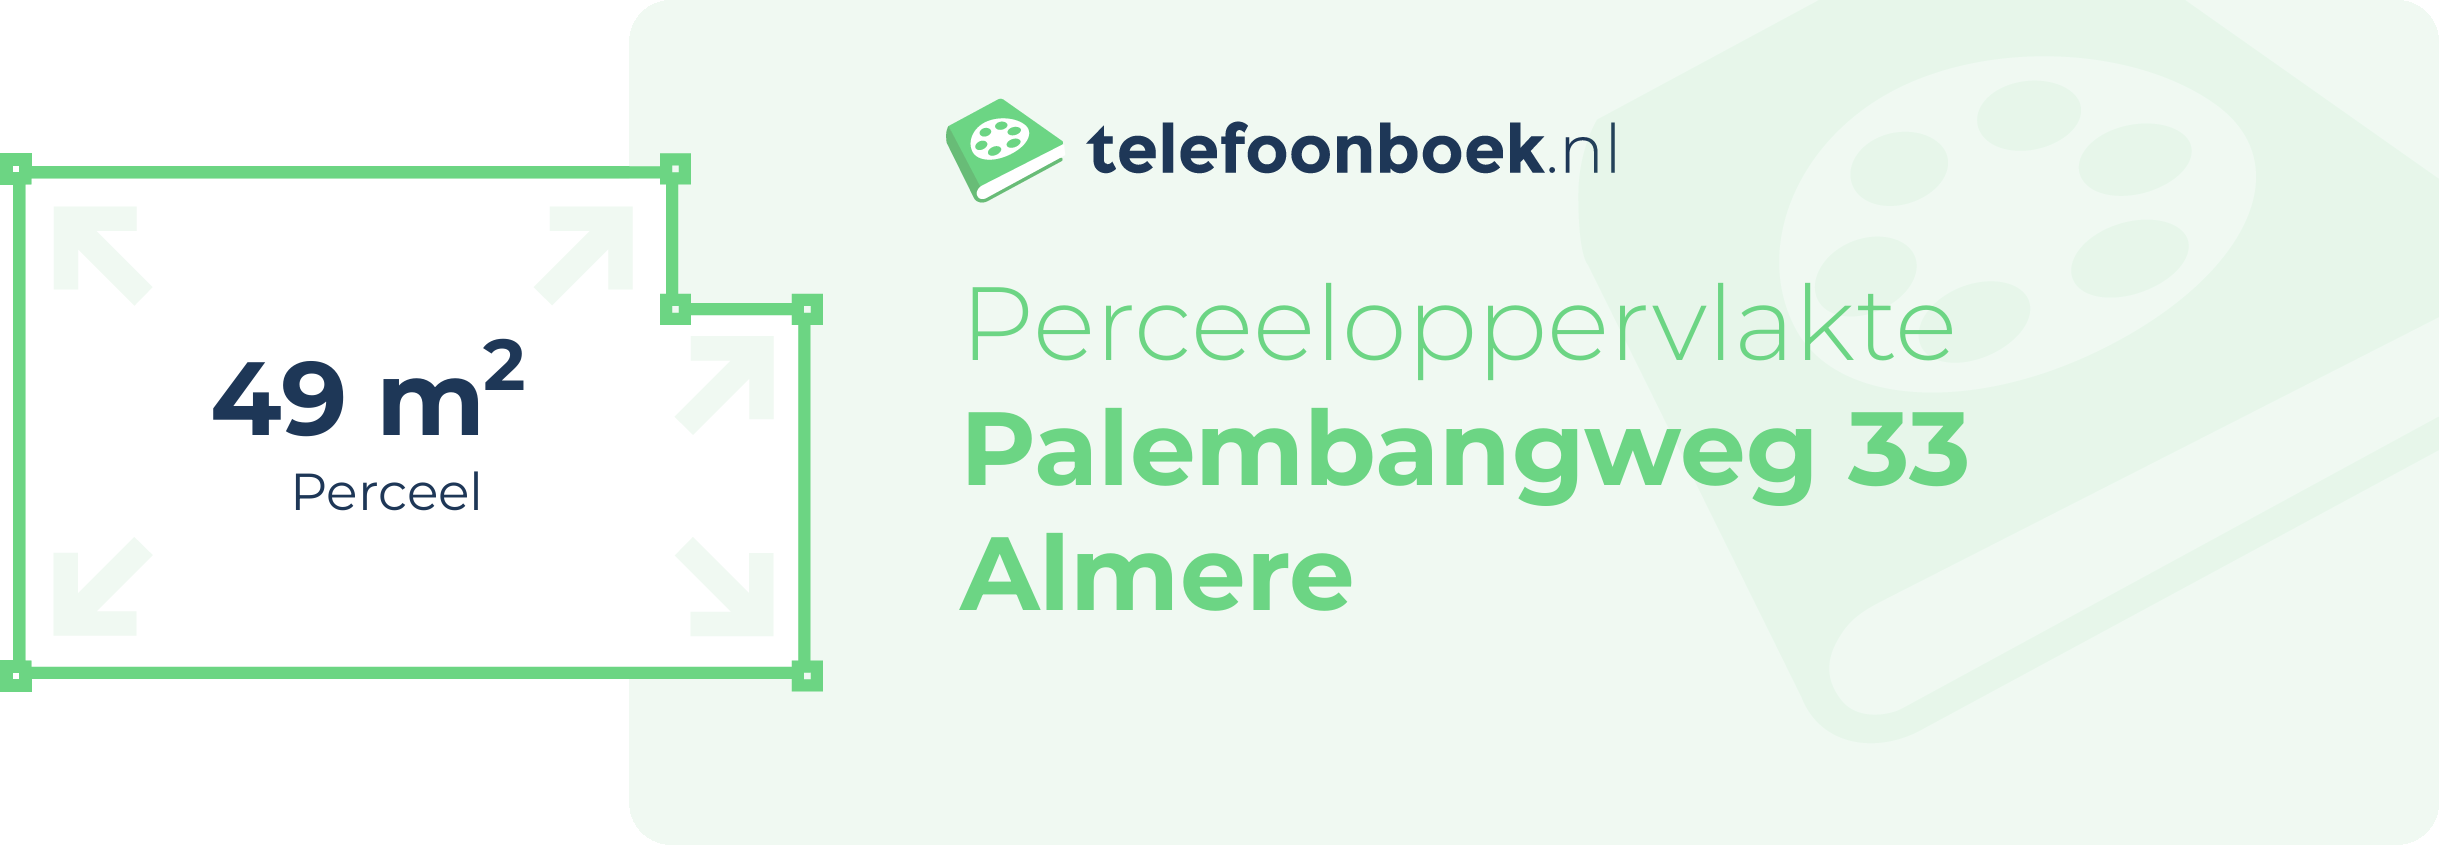 Perceeloppervlakte Palembangweg 33 Almere